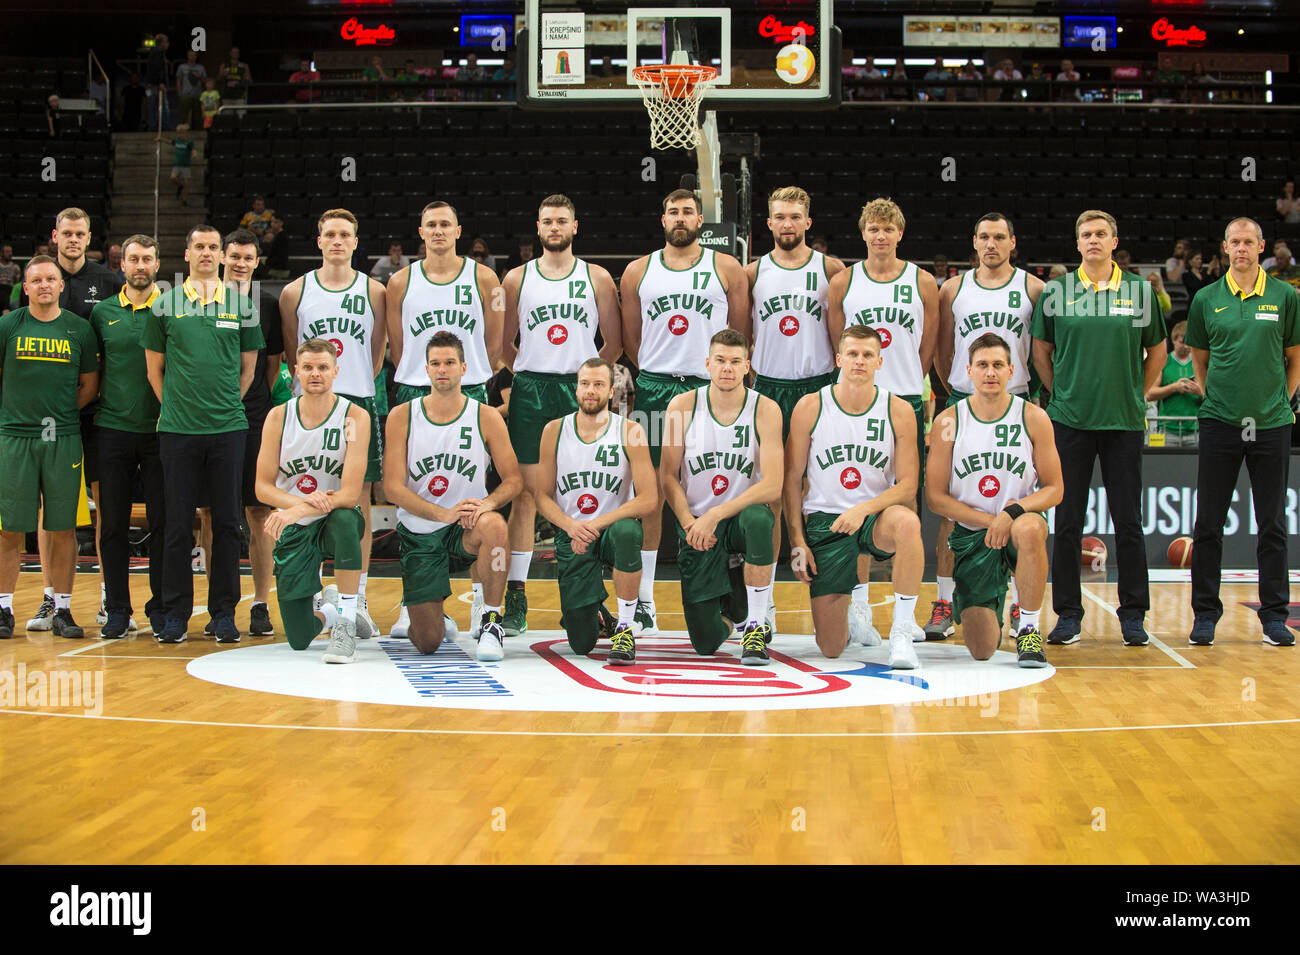 Lithuanian basketball team -Fotos und -Bildmaterial in hoher Auflösung –  Alamy